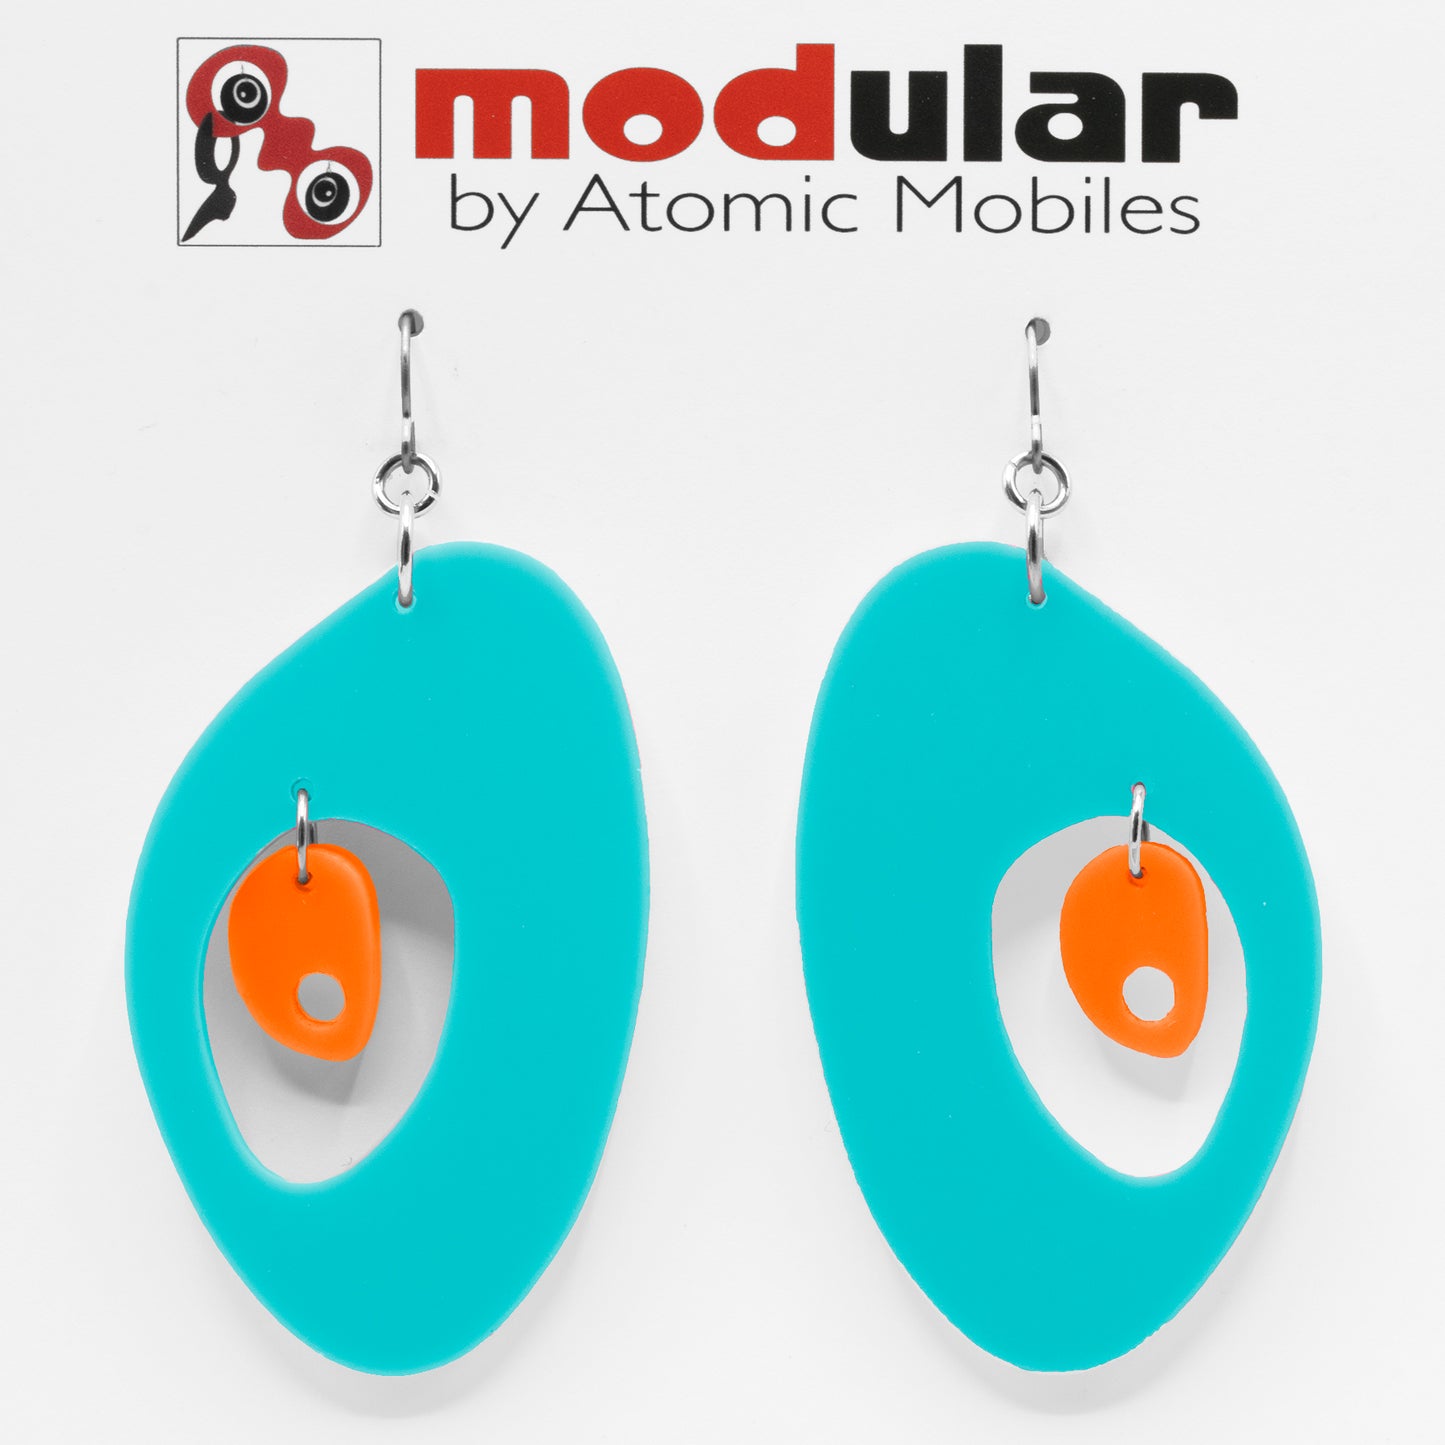 MODular Earrings - The Modernist Statement Earrings in Aqua and Orange by AtomicMobiles.com - retro era inspired mod handmade jewelry